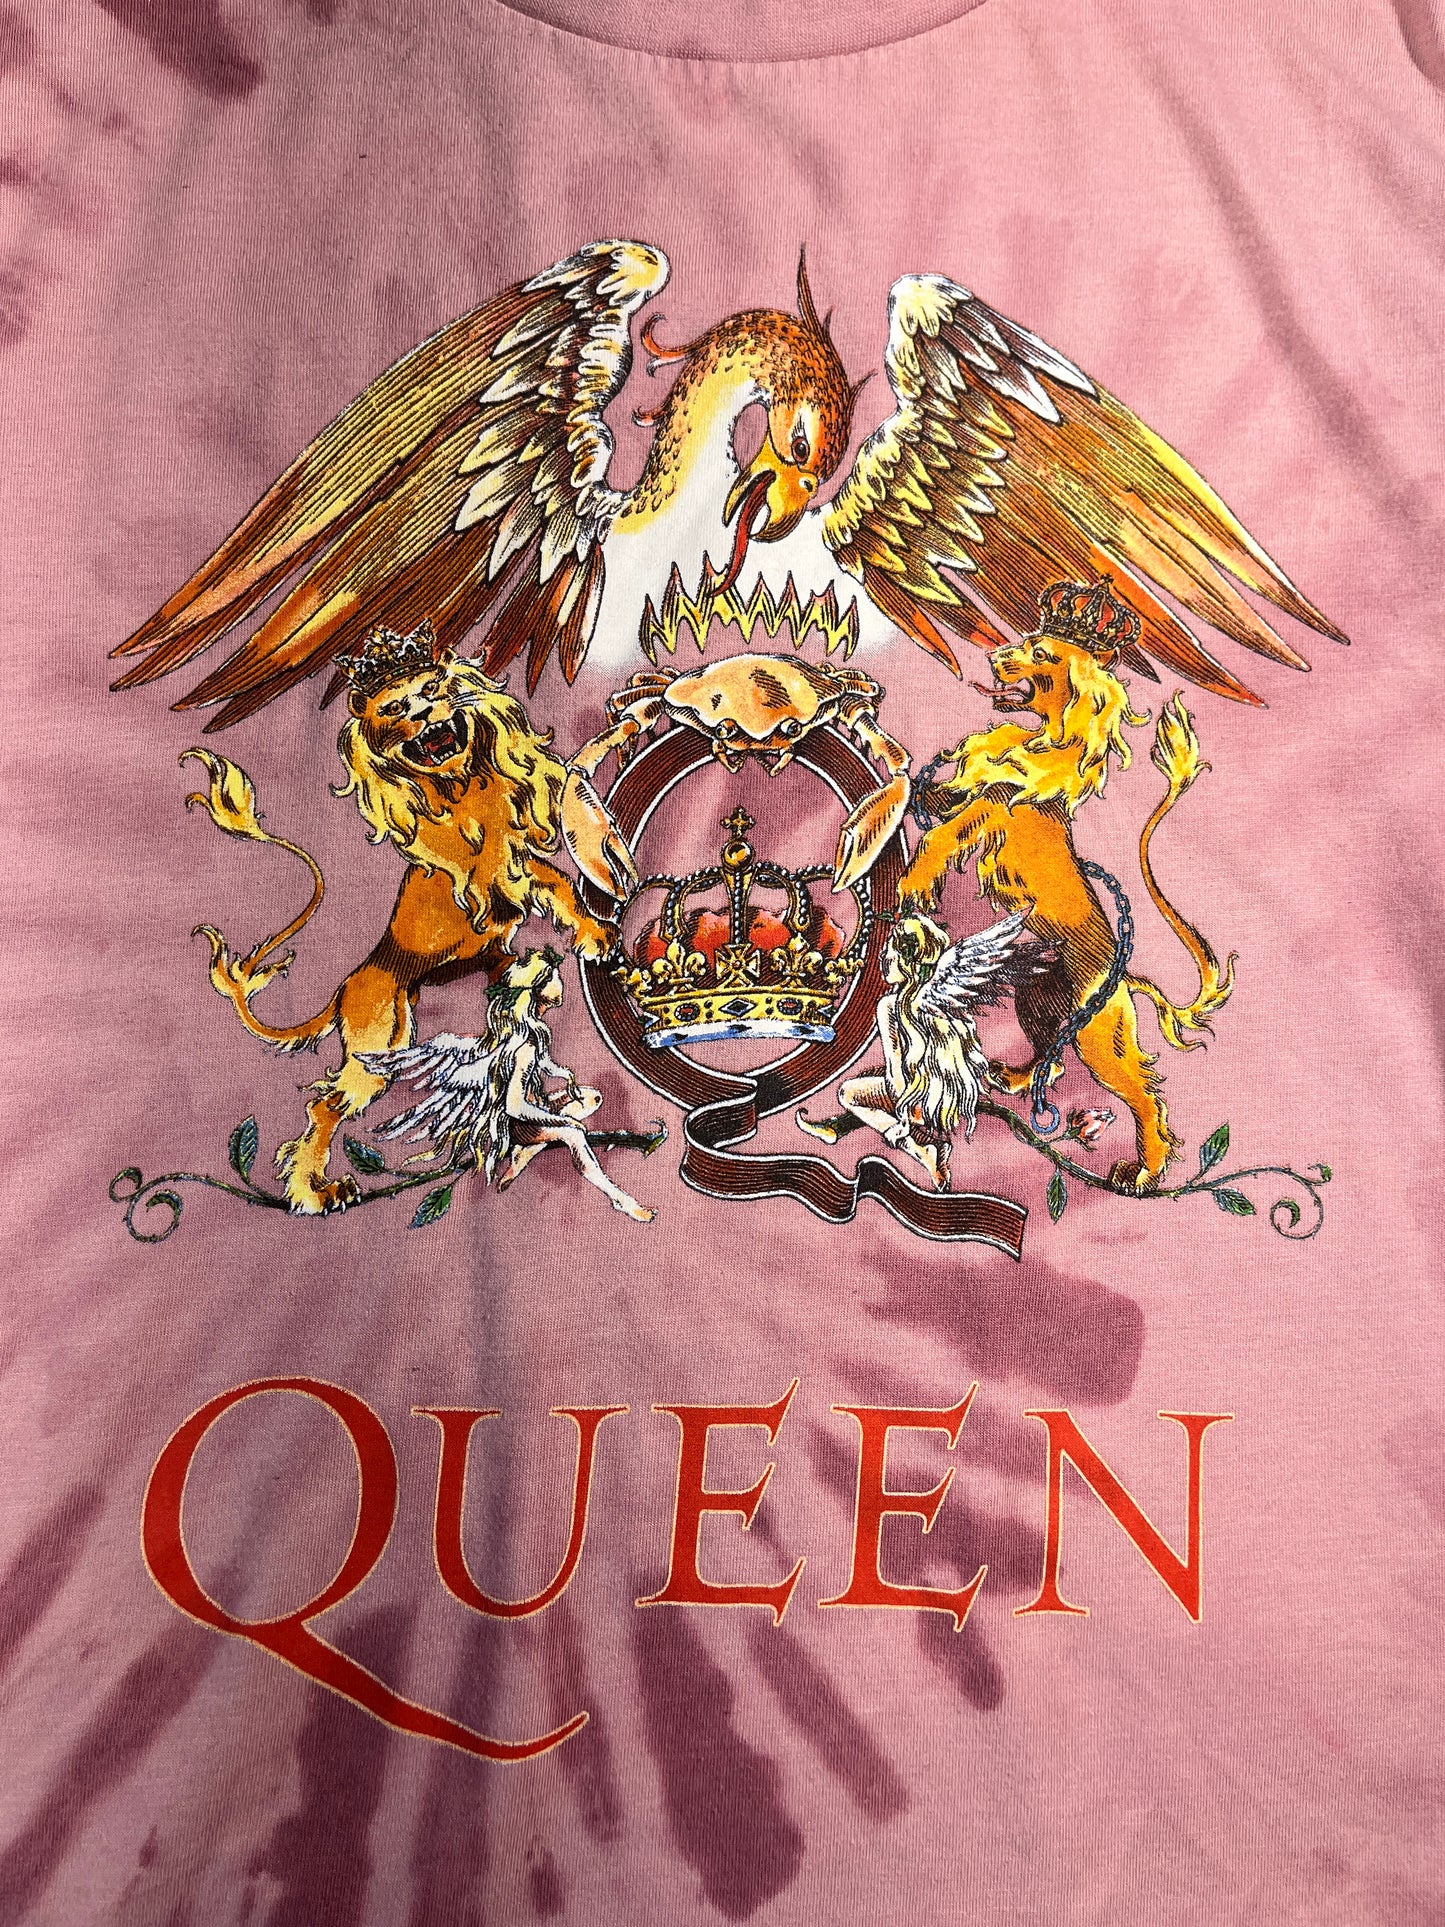 Vintage Queen T-Shirt Band Tee Freddie Mercury